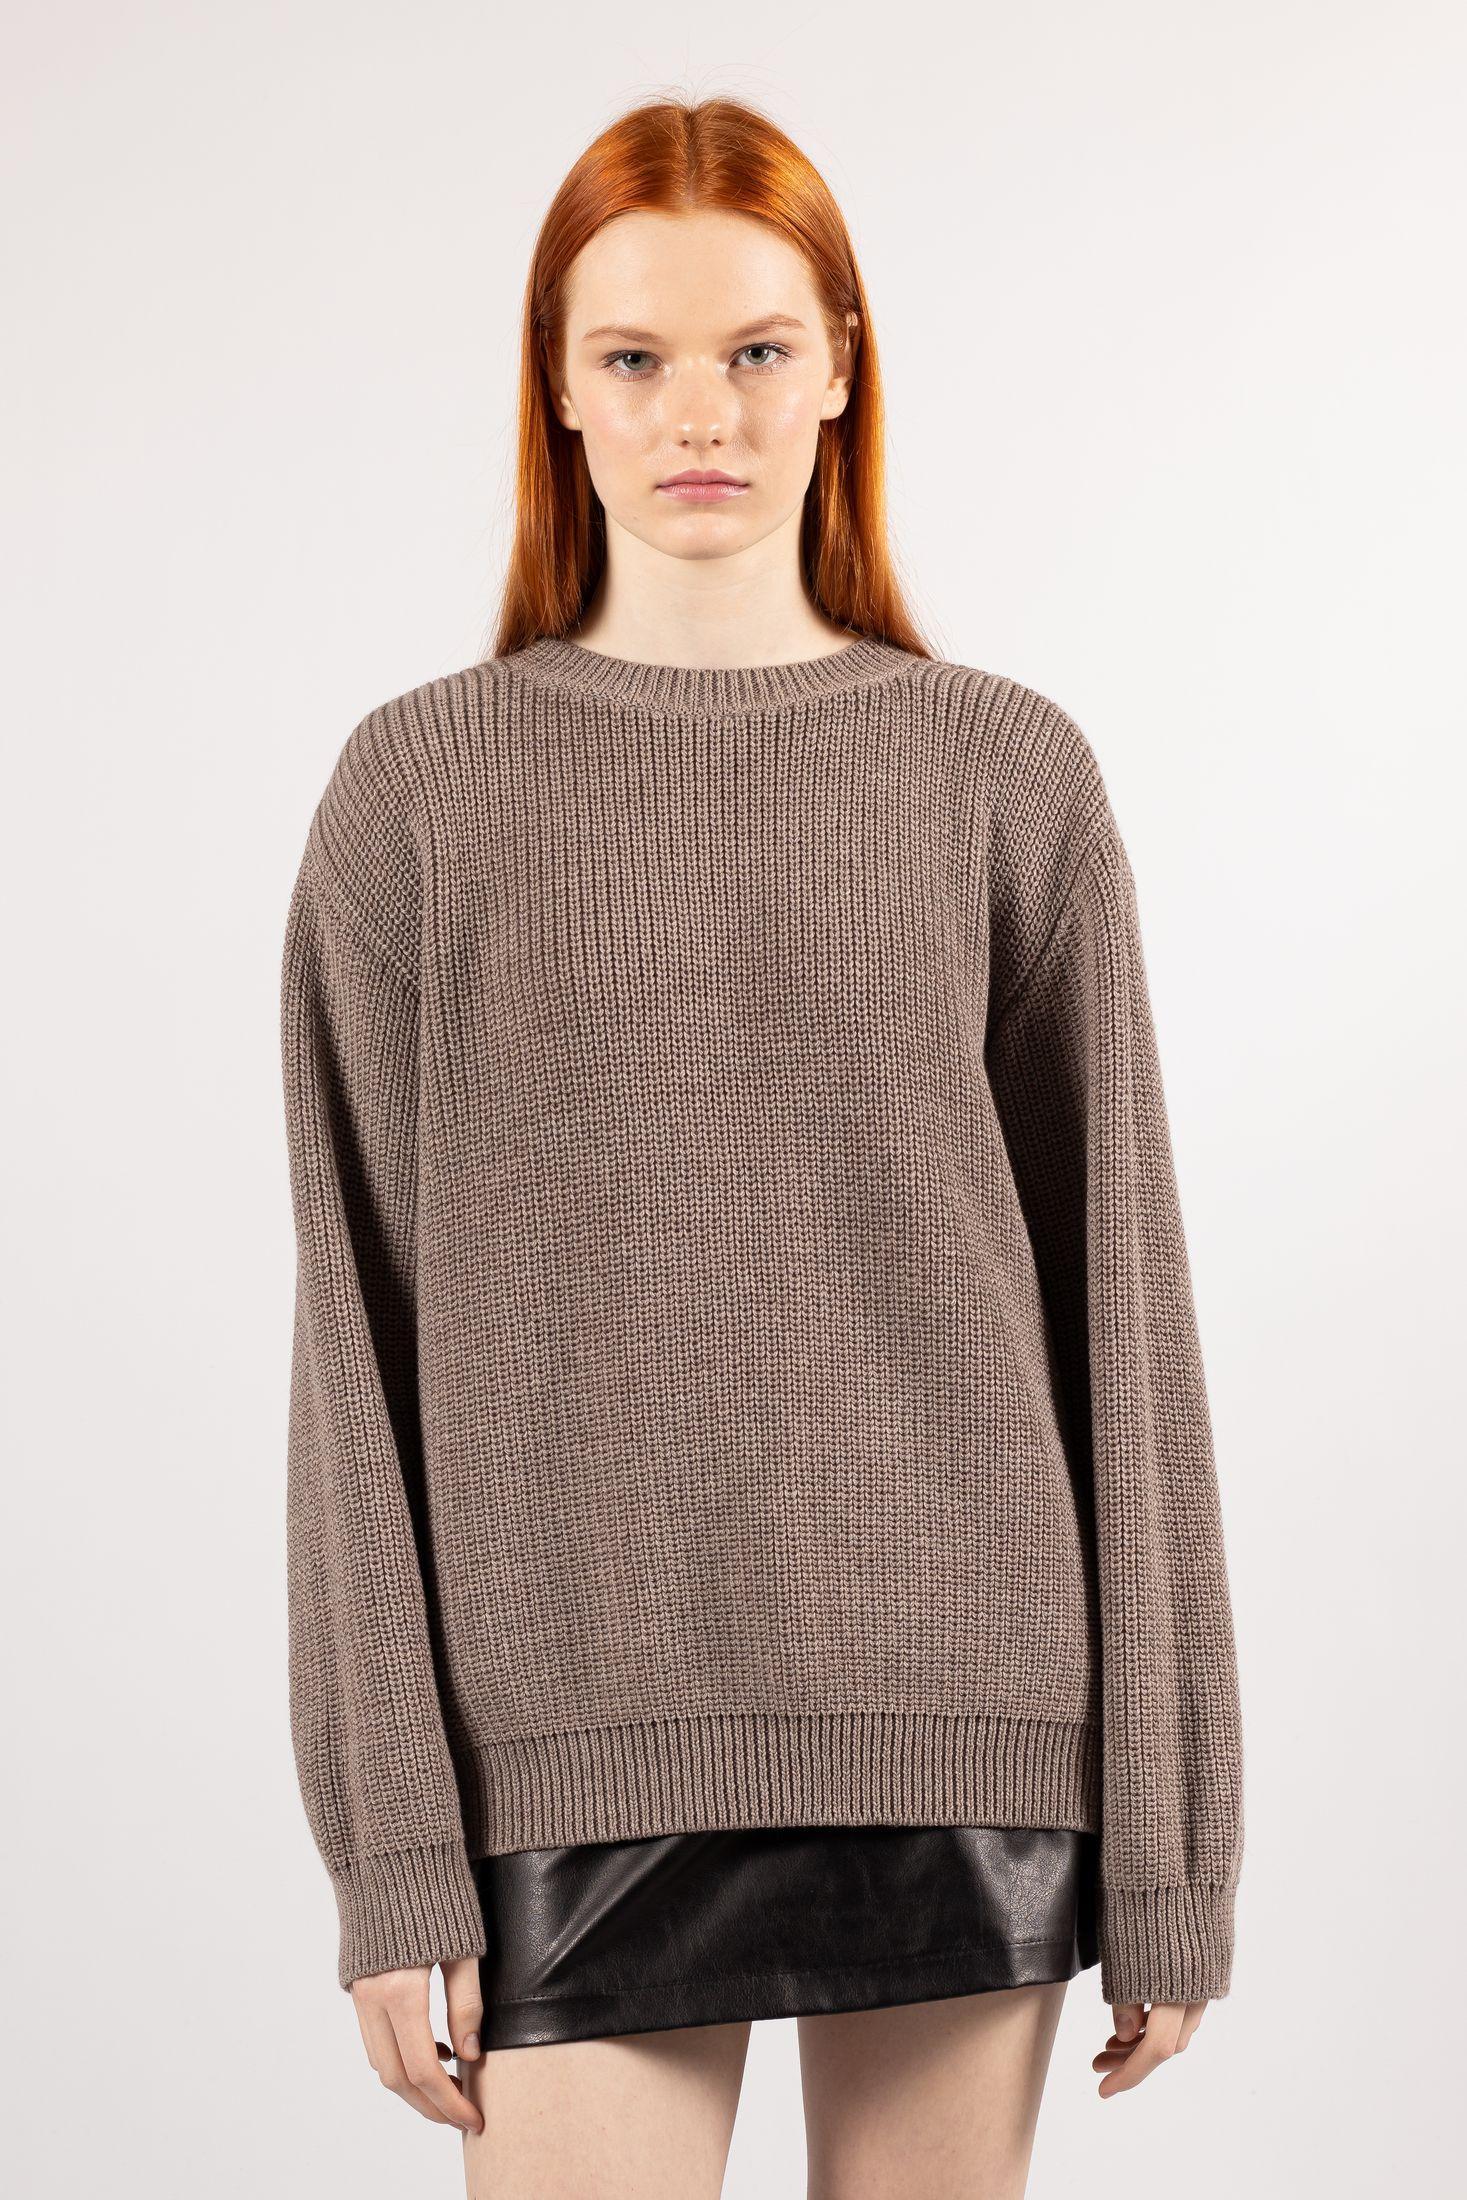 Brown merino wool sweater jumper, detachable collar